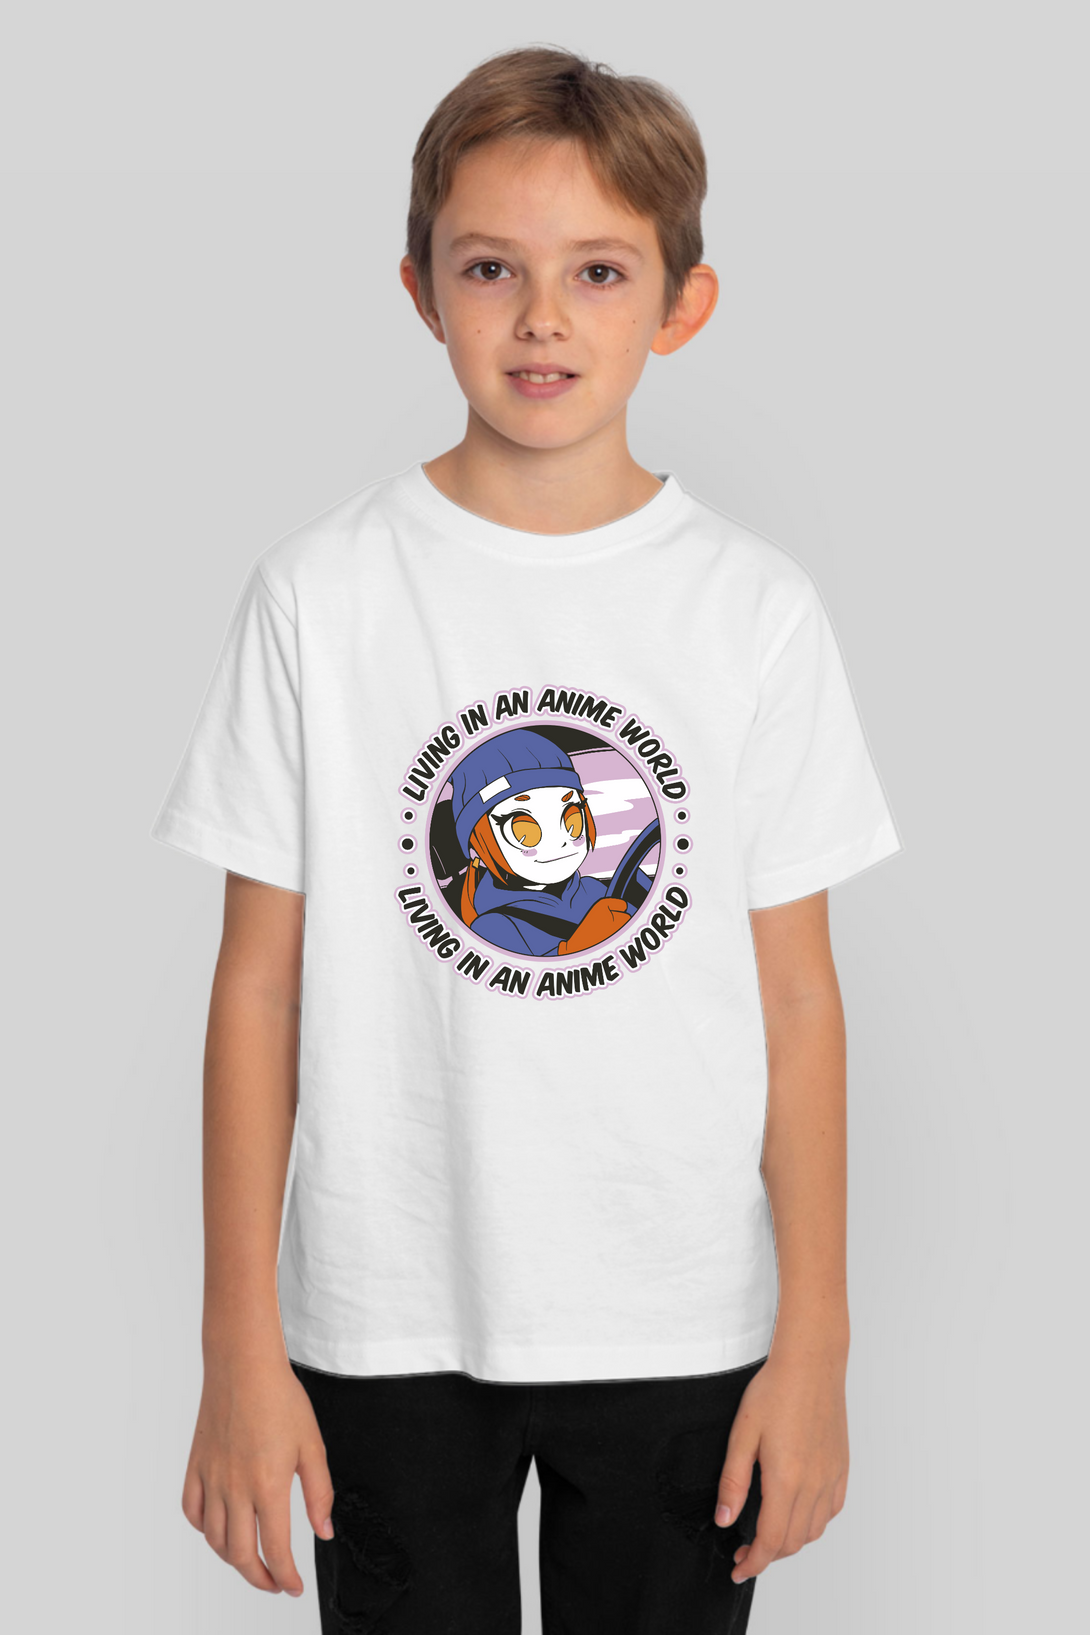 Cute Girl Driving Printed T-Shirt For Boy - WowWaves - 7